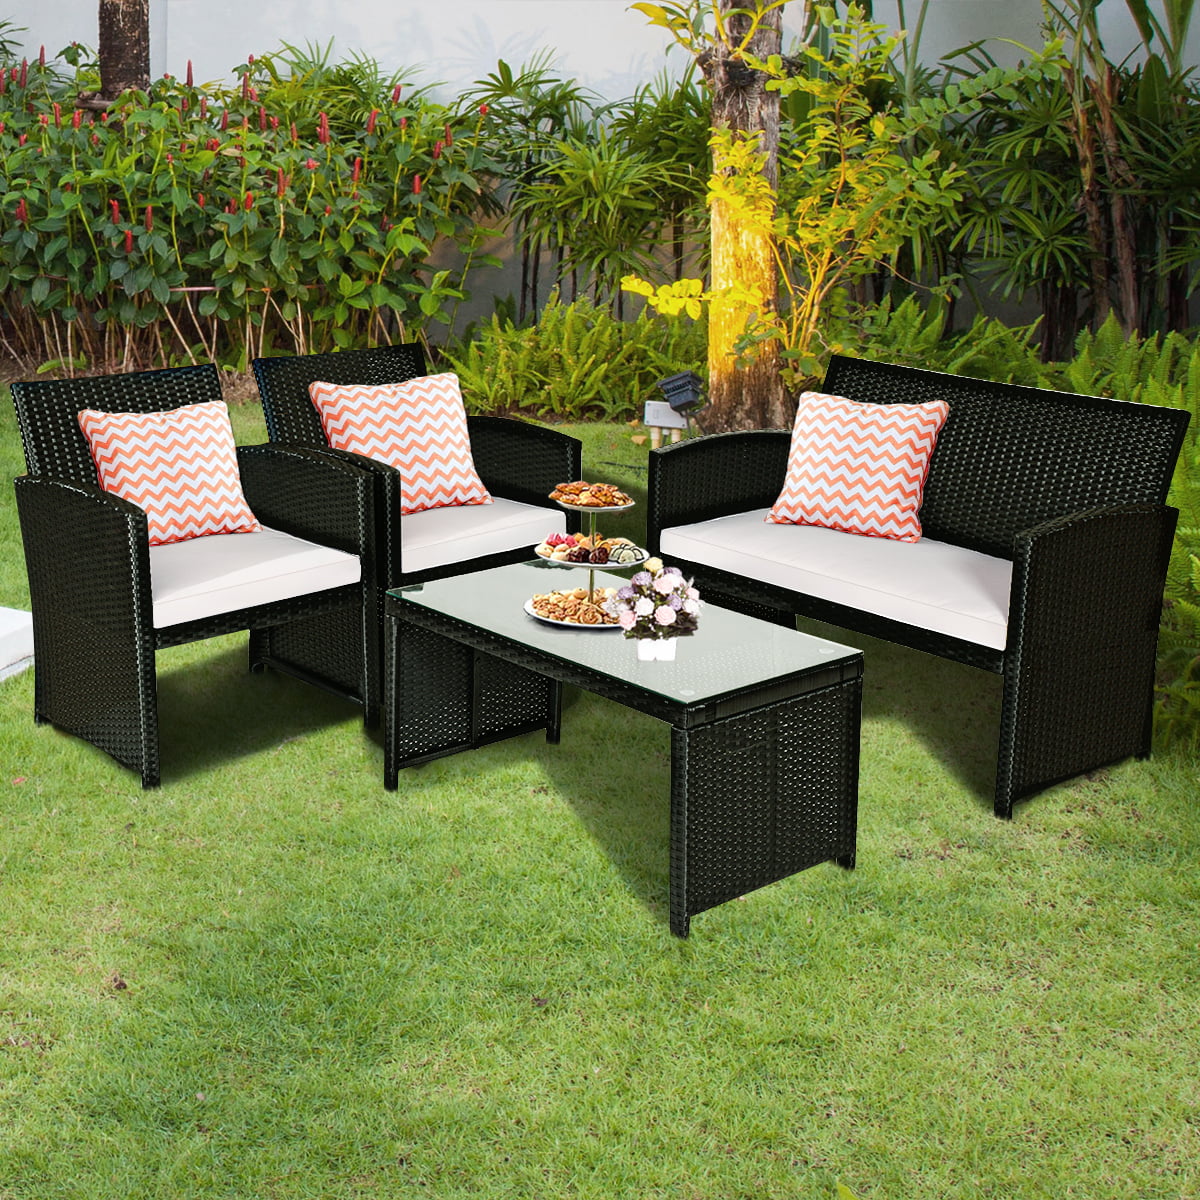 Steel Poly Rattan Garden Furniture Set Patio Wicker 2x Chair 1x Table black new 